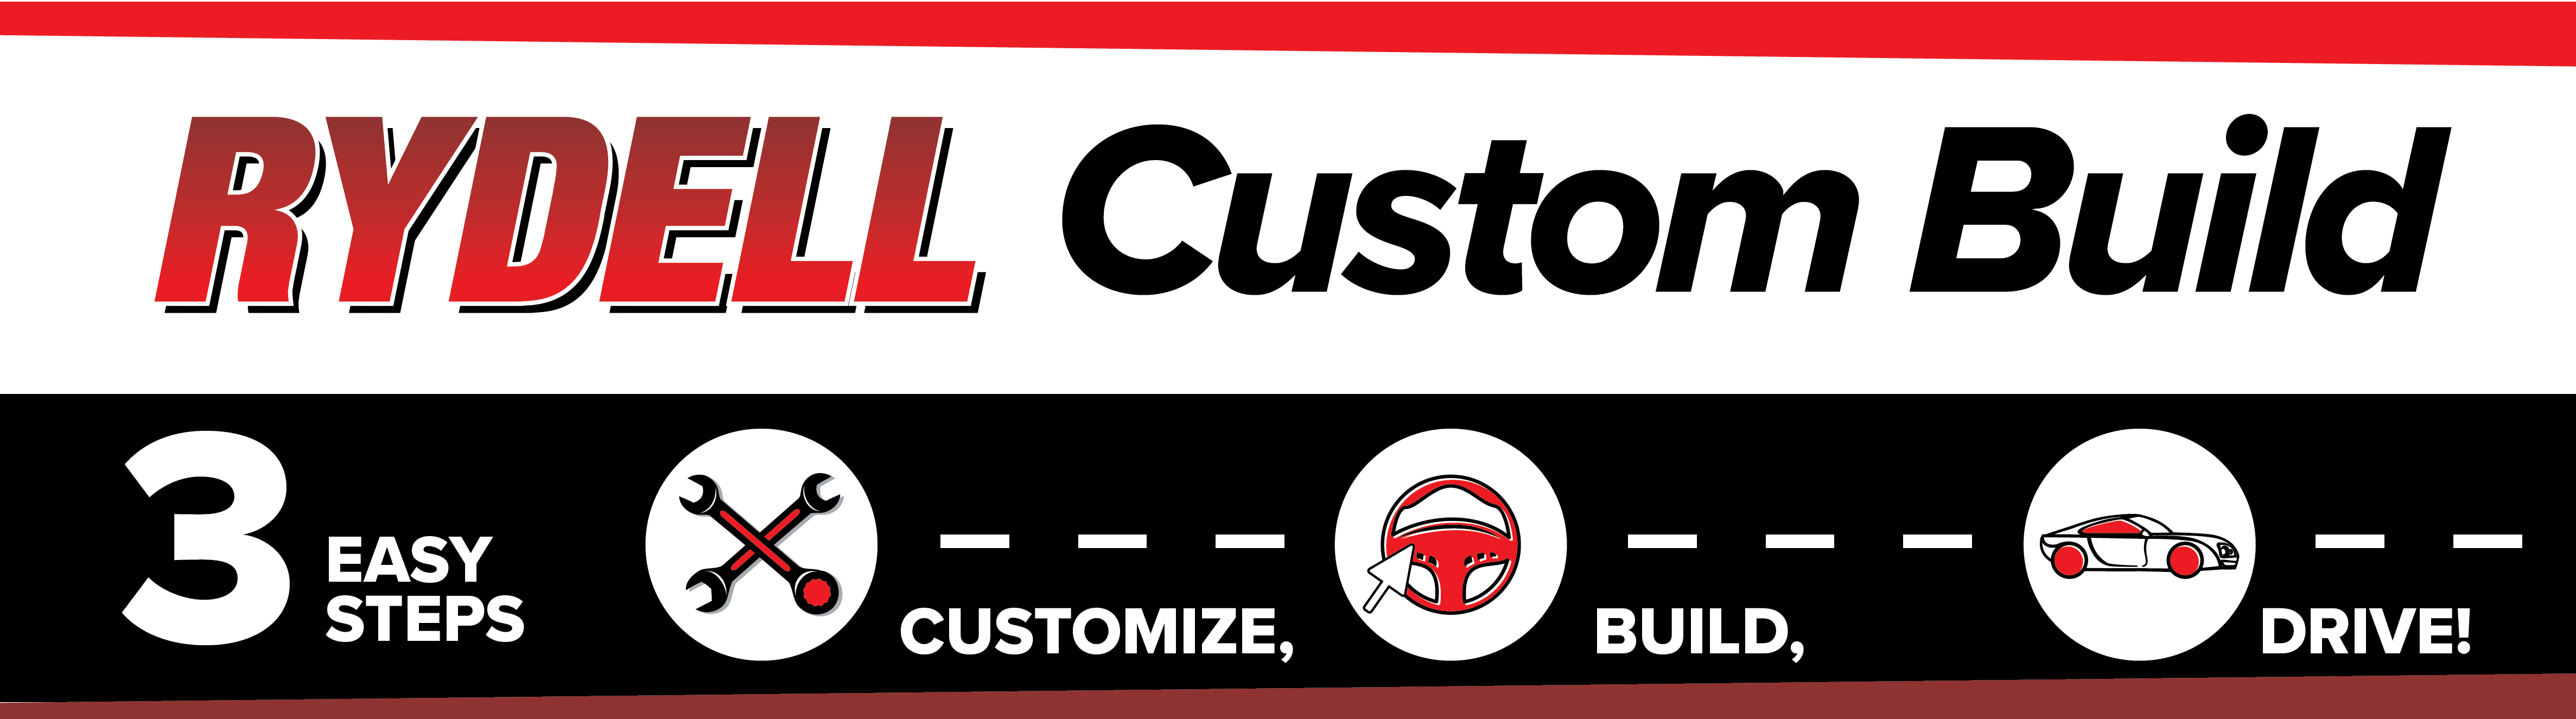 Rydell Custom Build - 3 easy steps - customize, build, drive!